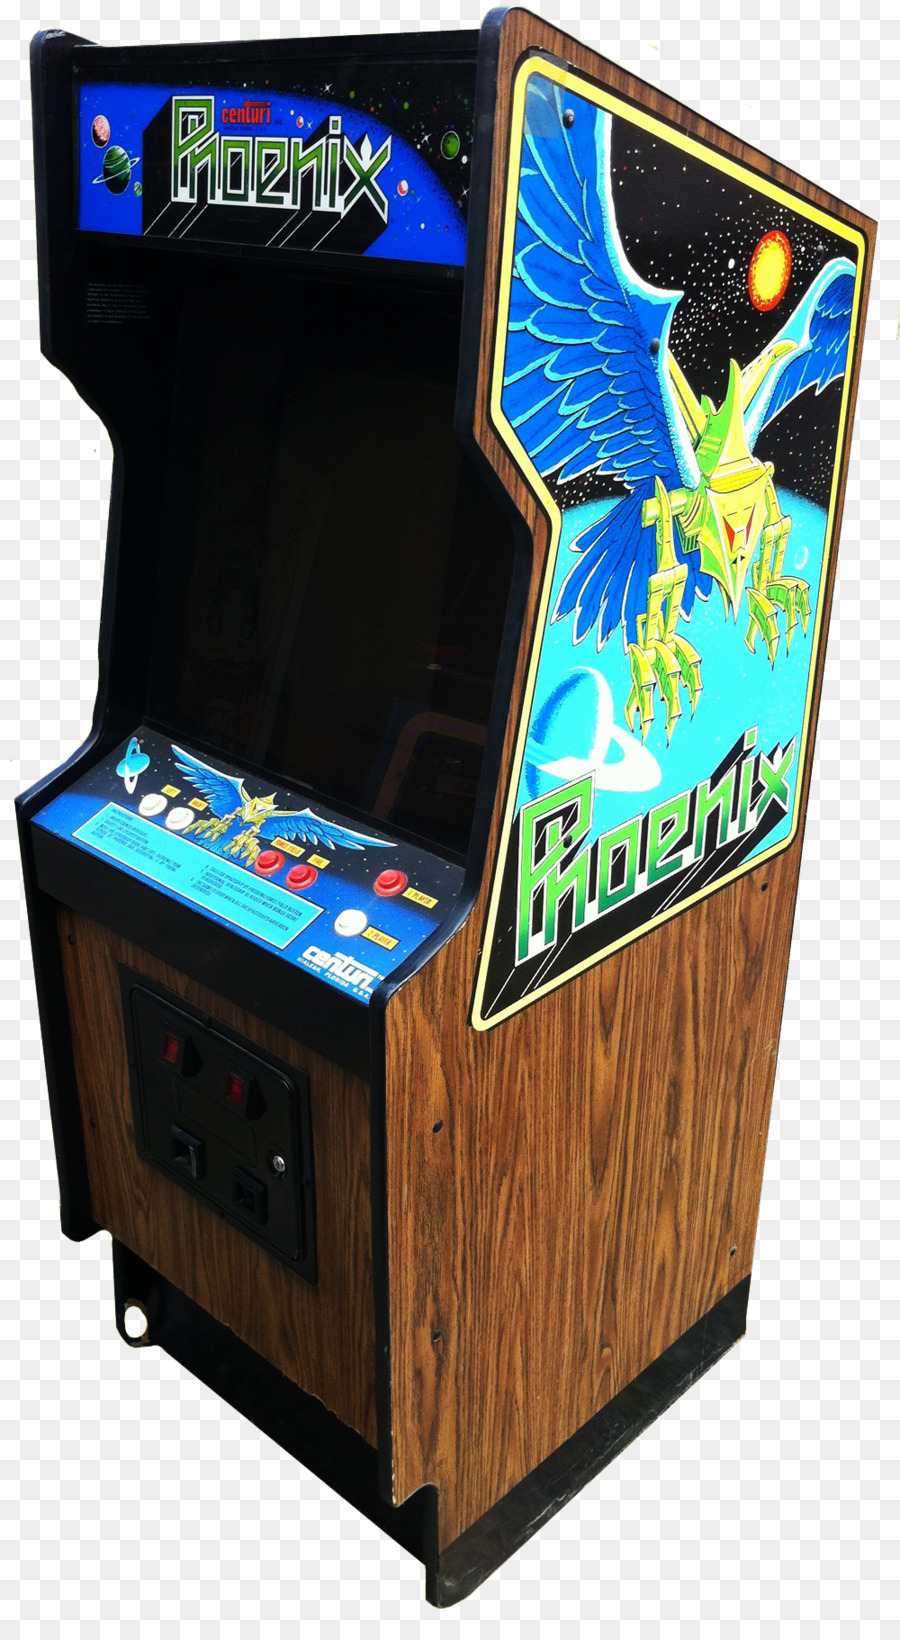 Phoenix Video Game Arcade Cabinet